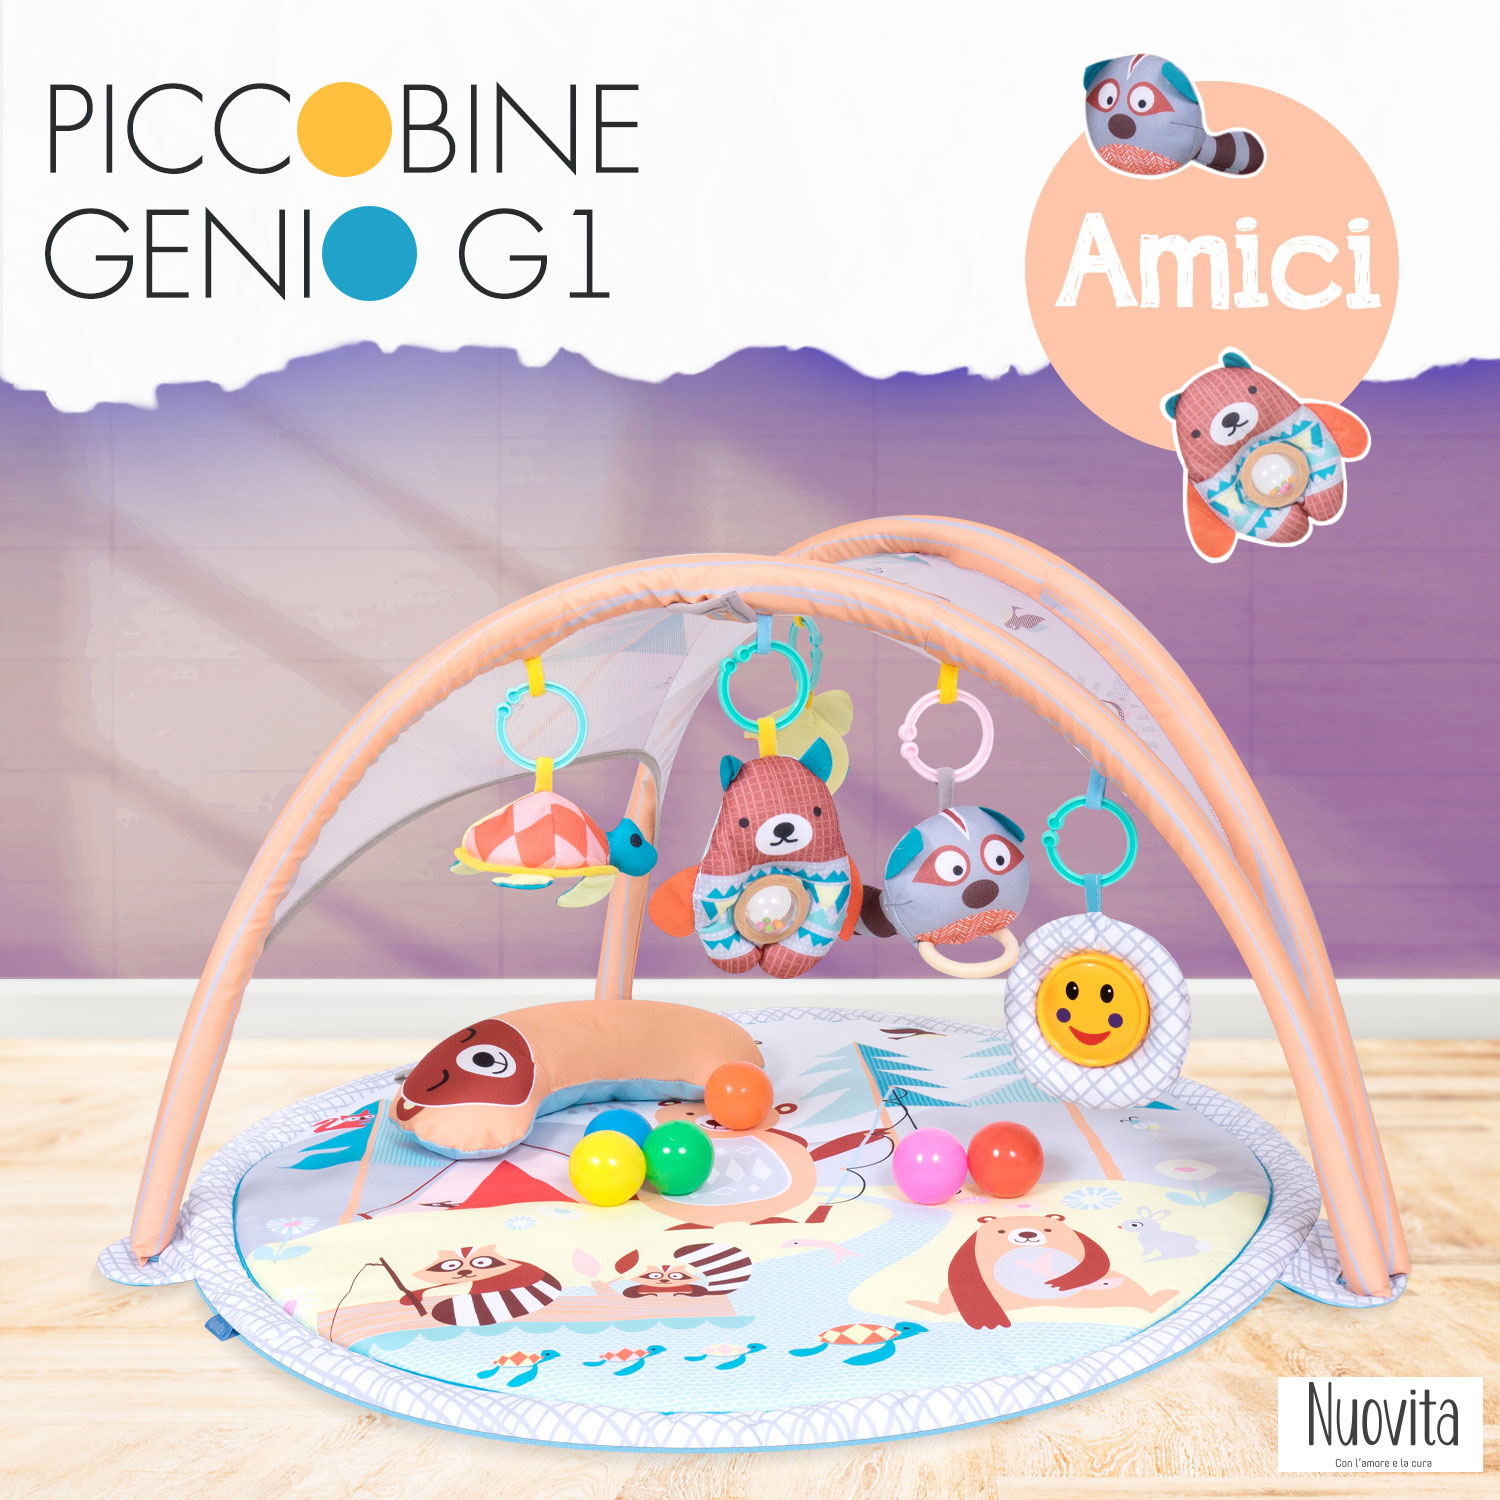 Игровой развивающий коврик Nuovita Piccobine Genio G1 (Amici/Друзья)